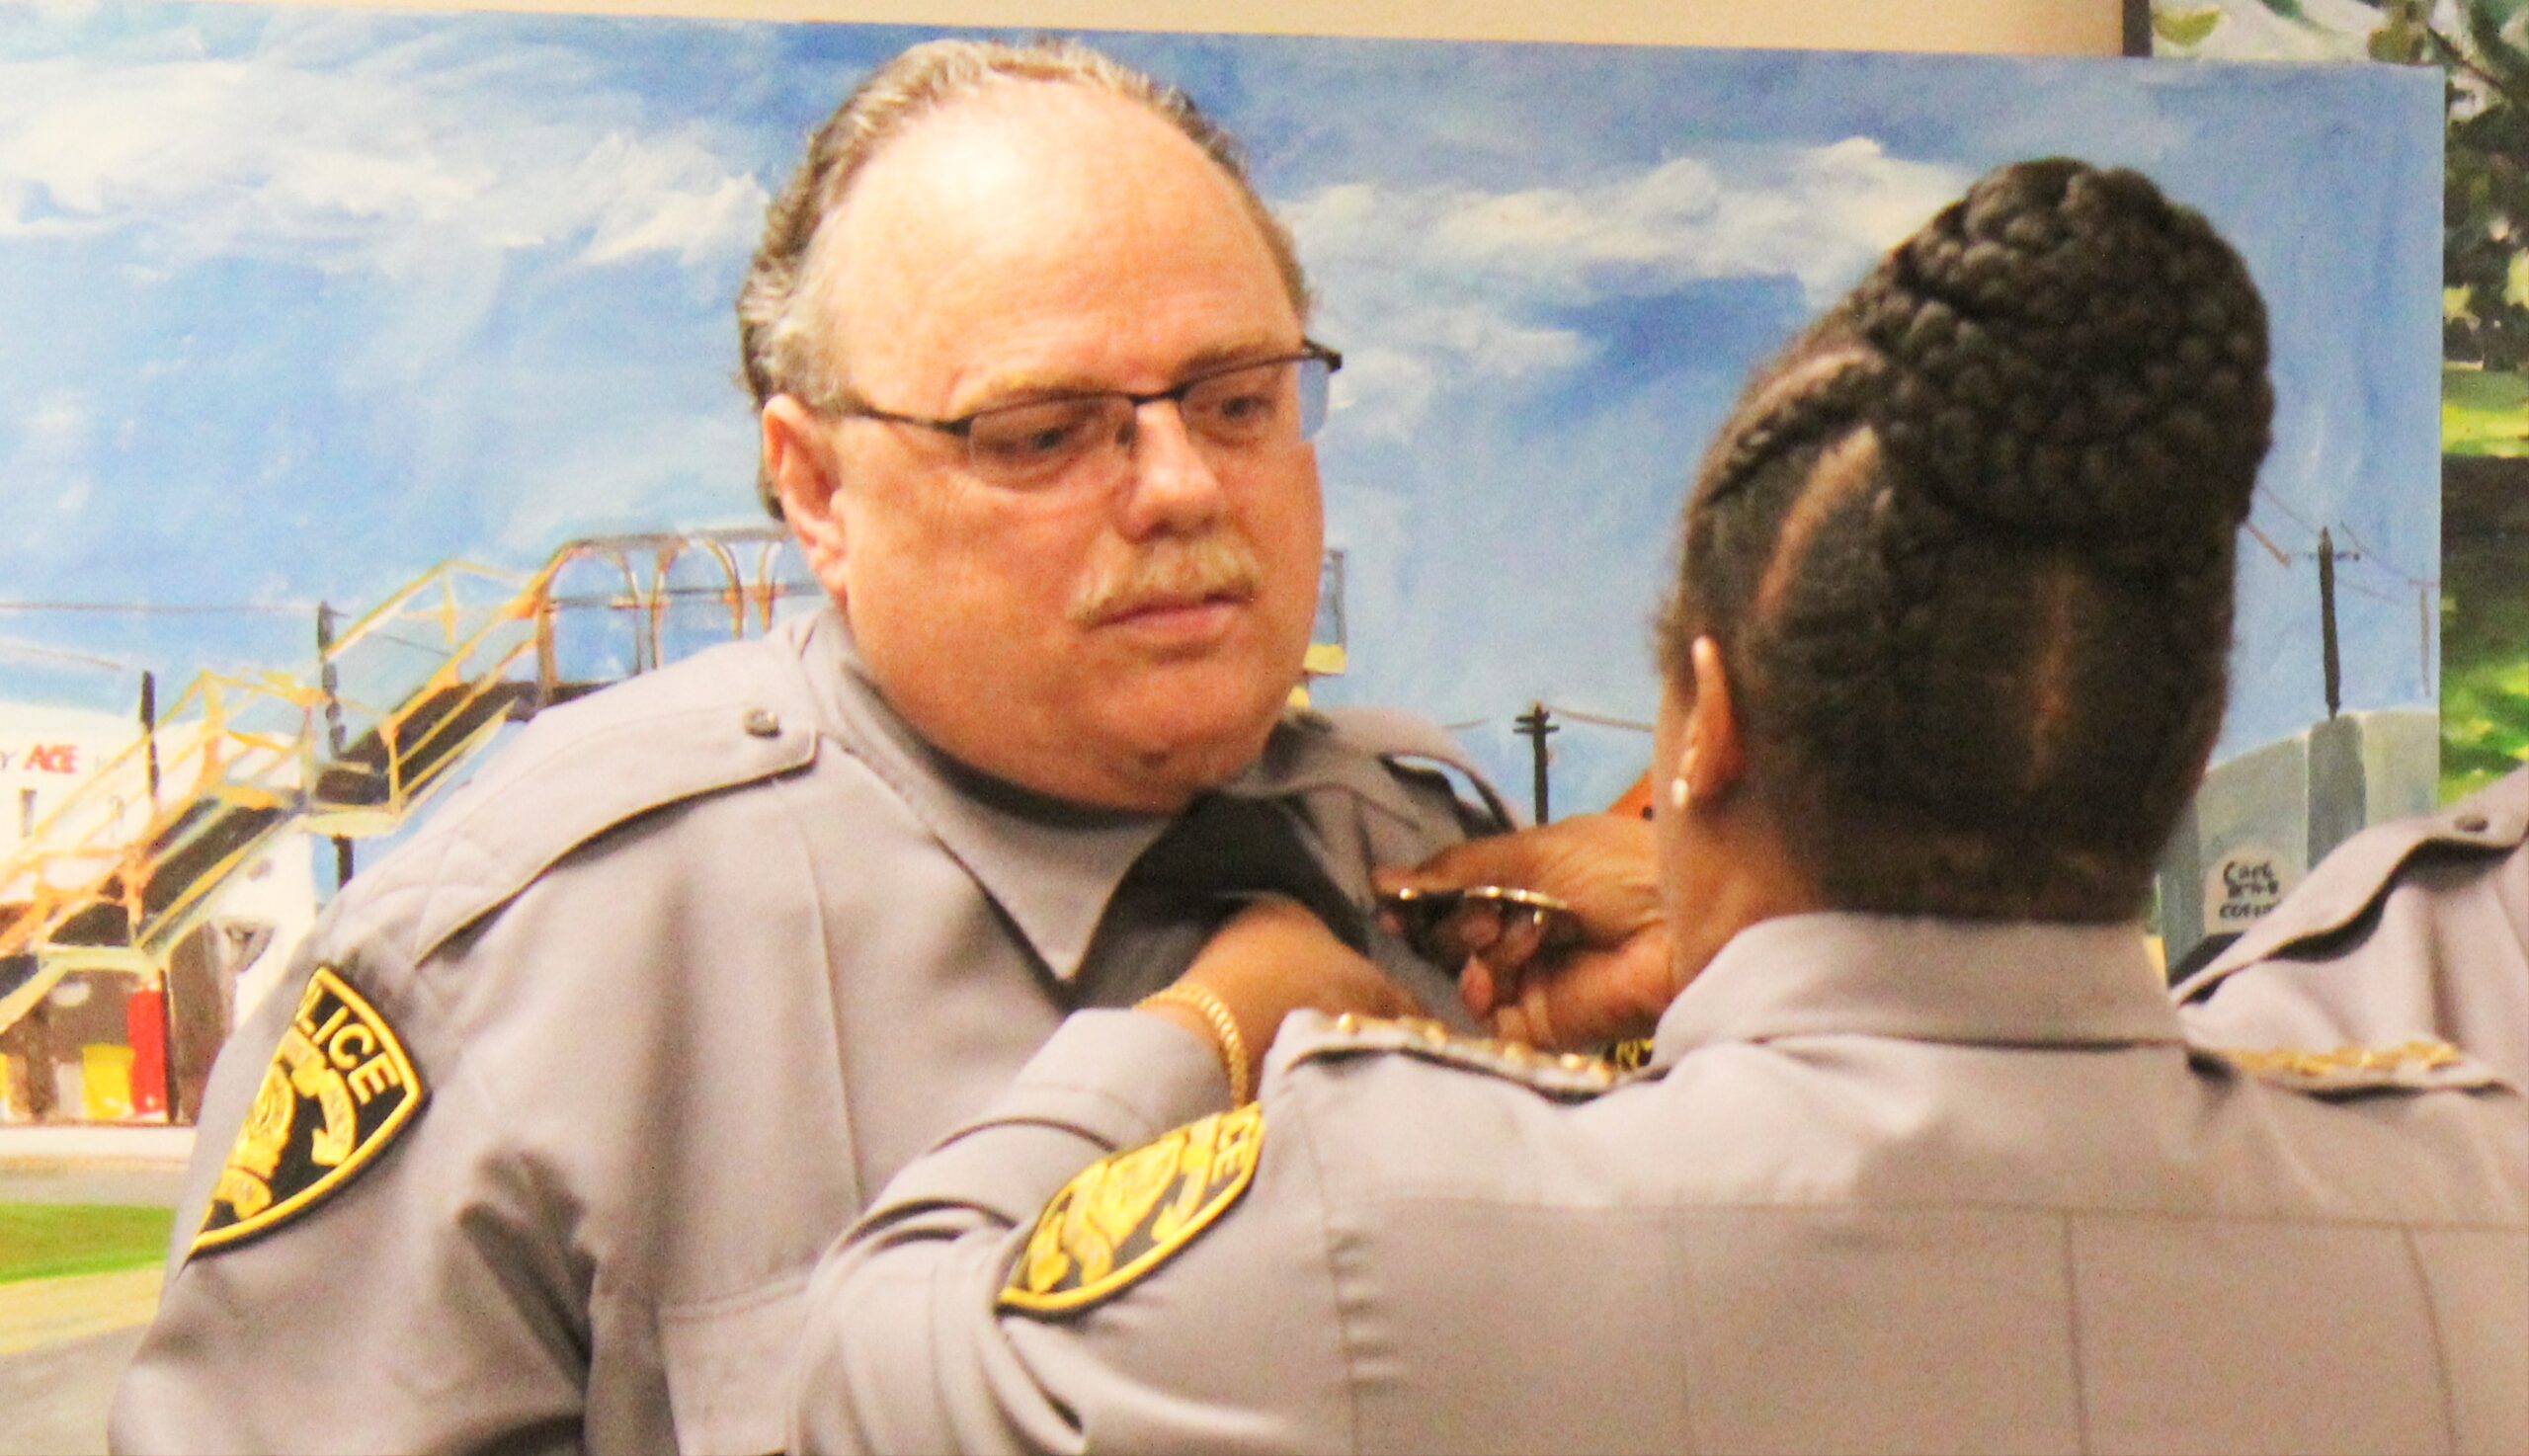 South Fulton Police Officer Fired after Arrest